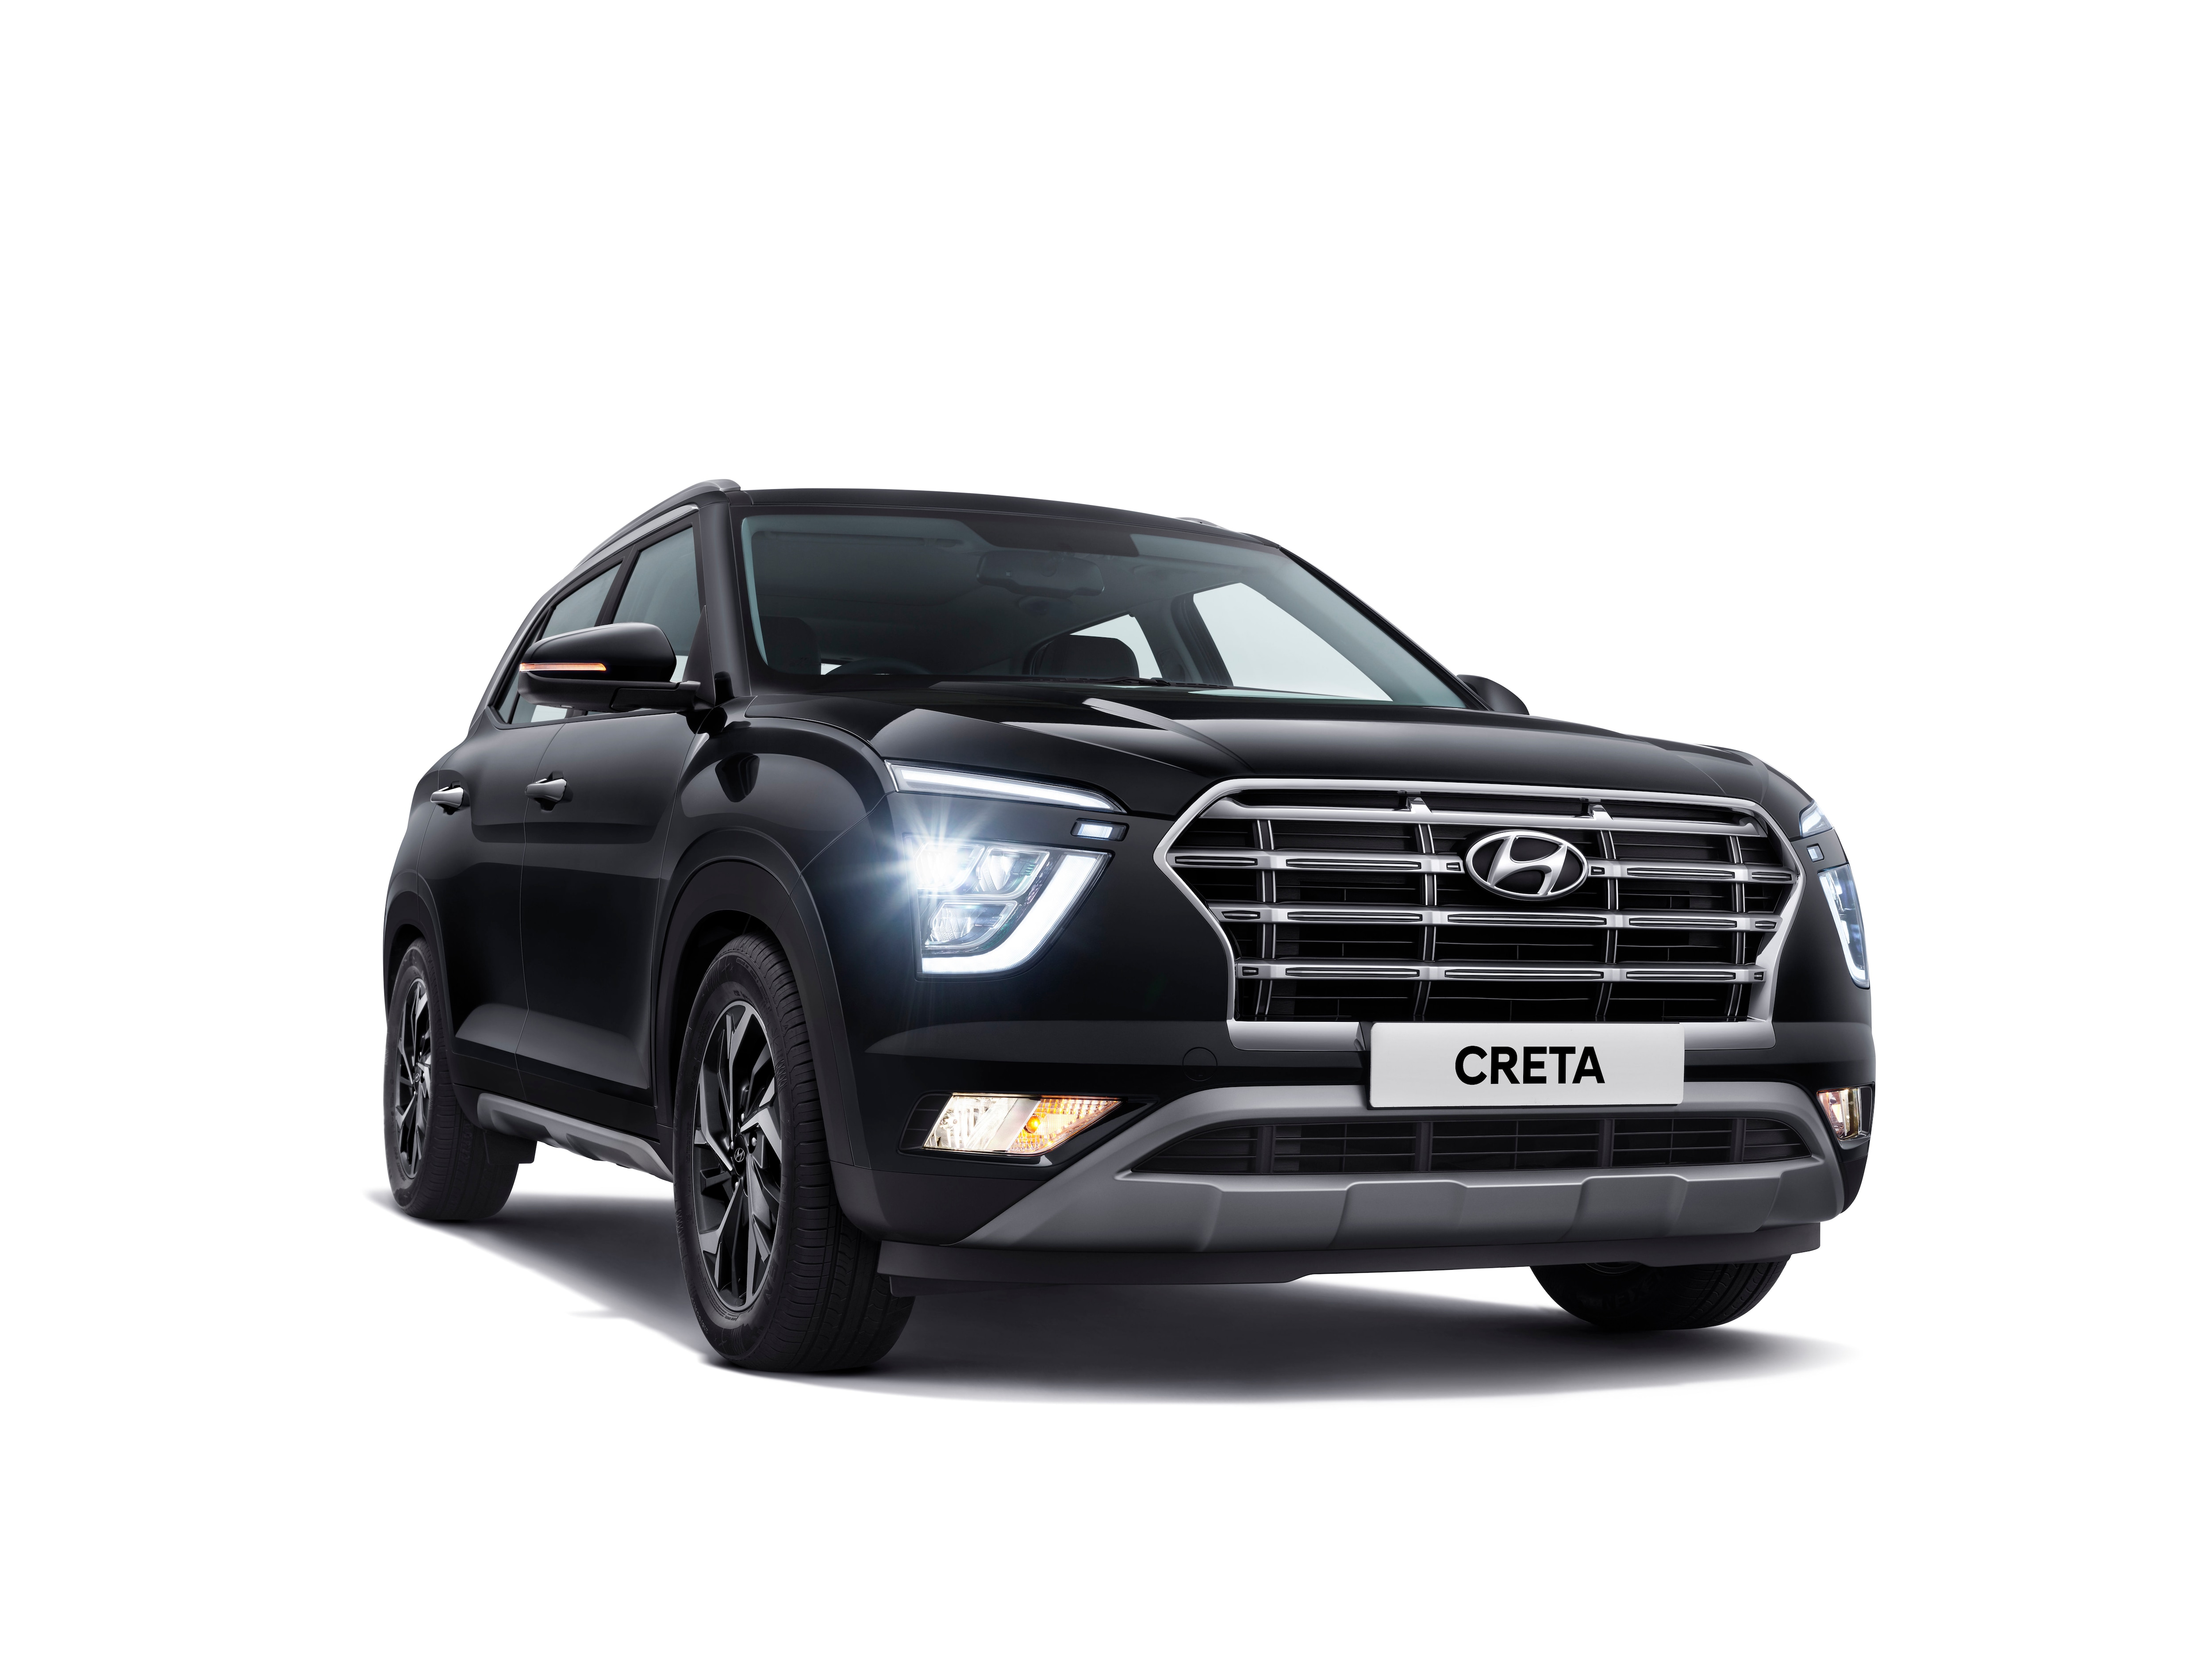 The front profile of new Creta from Hyundai.